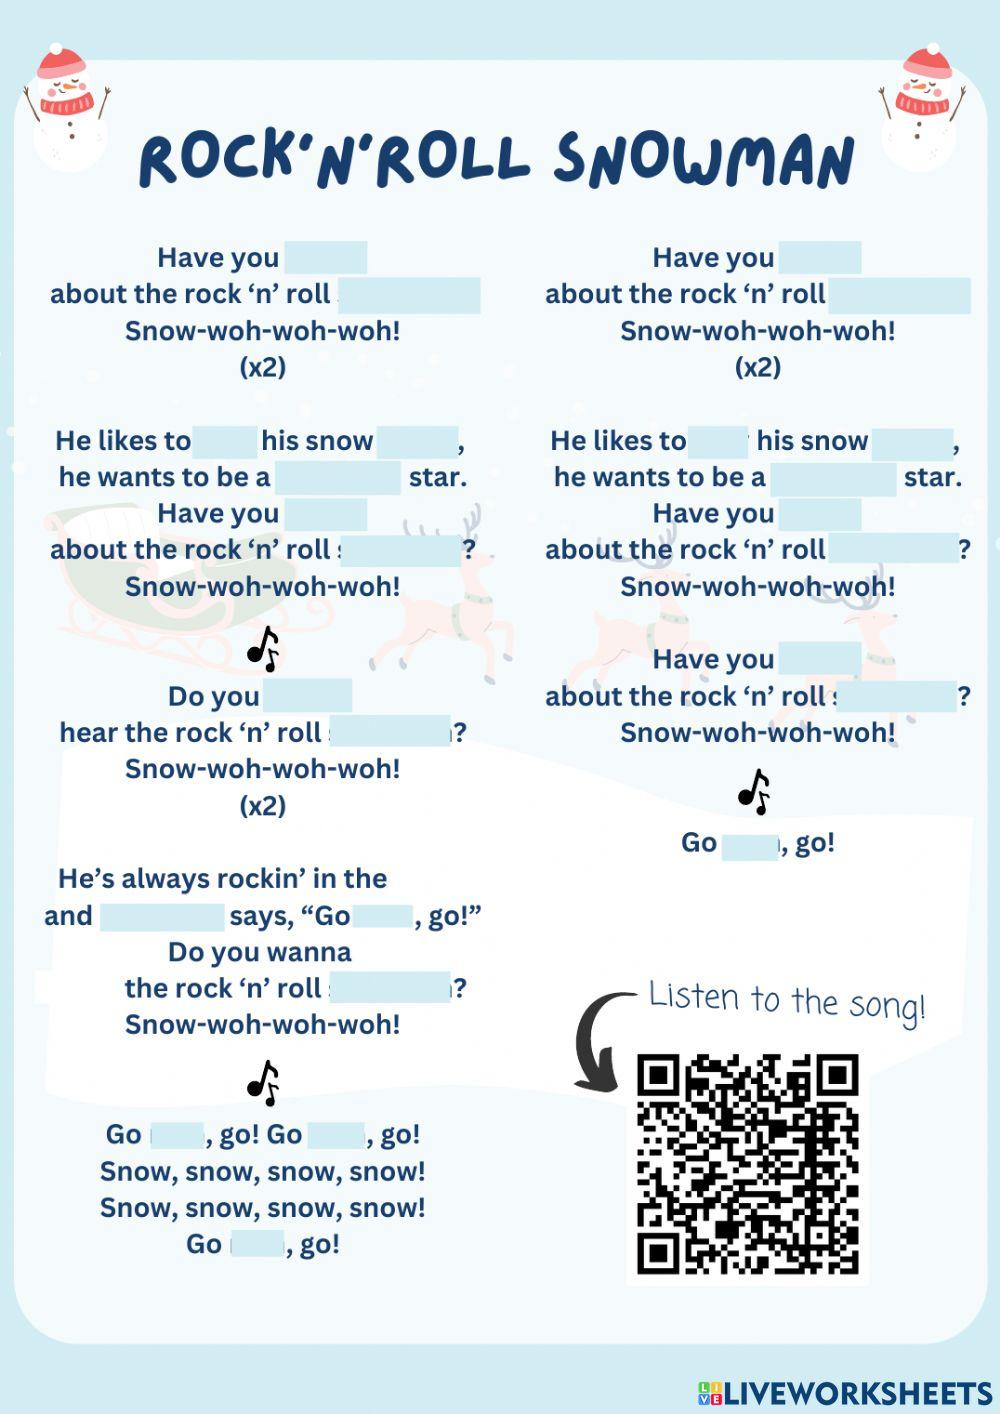 Rock'n'roll Snowman Lyrics Game worksheet | Live Worksheets